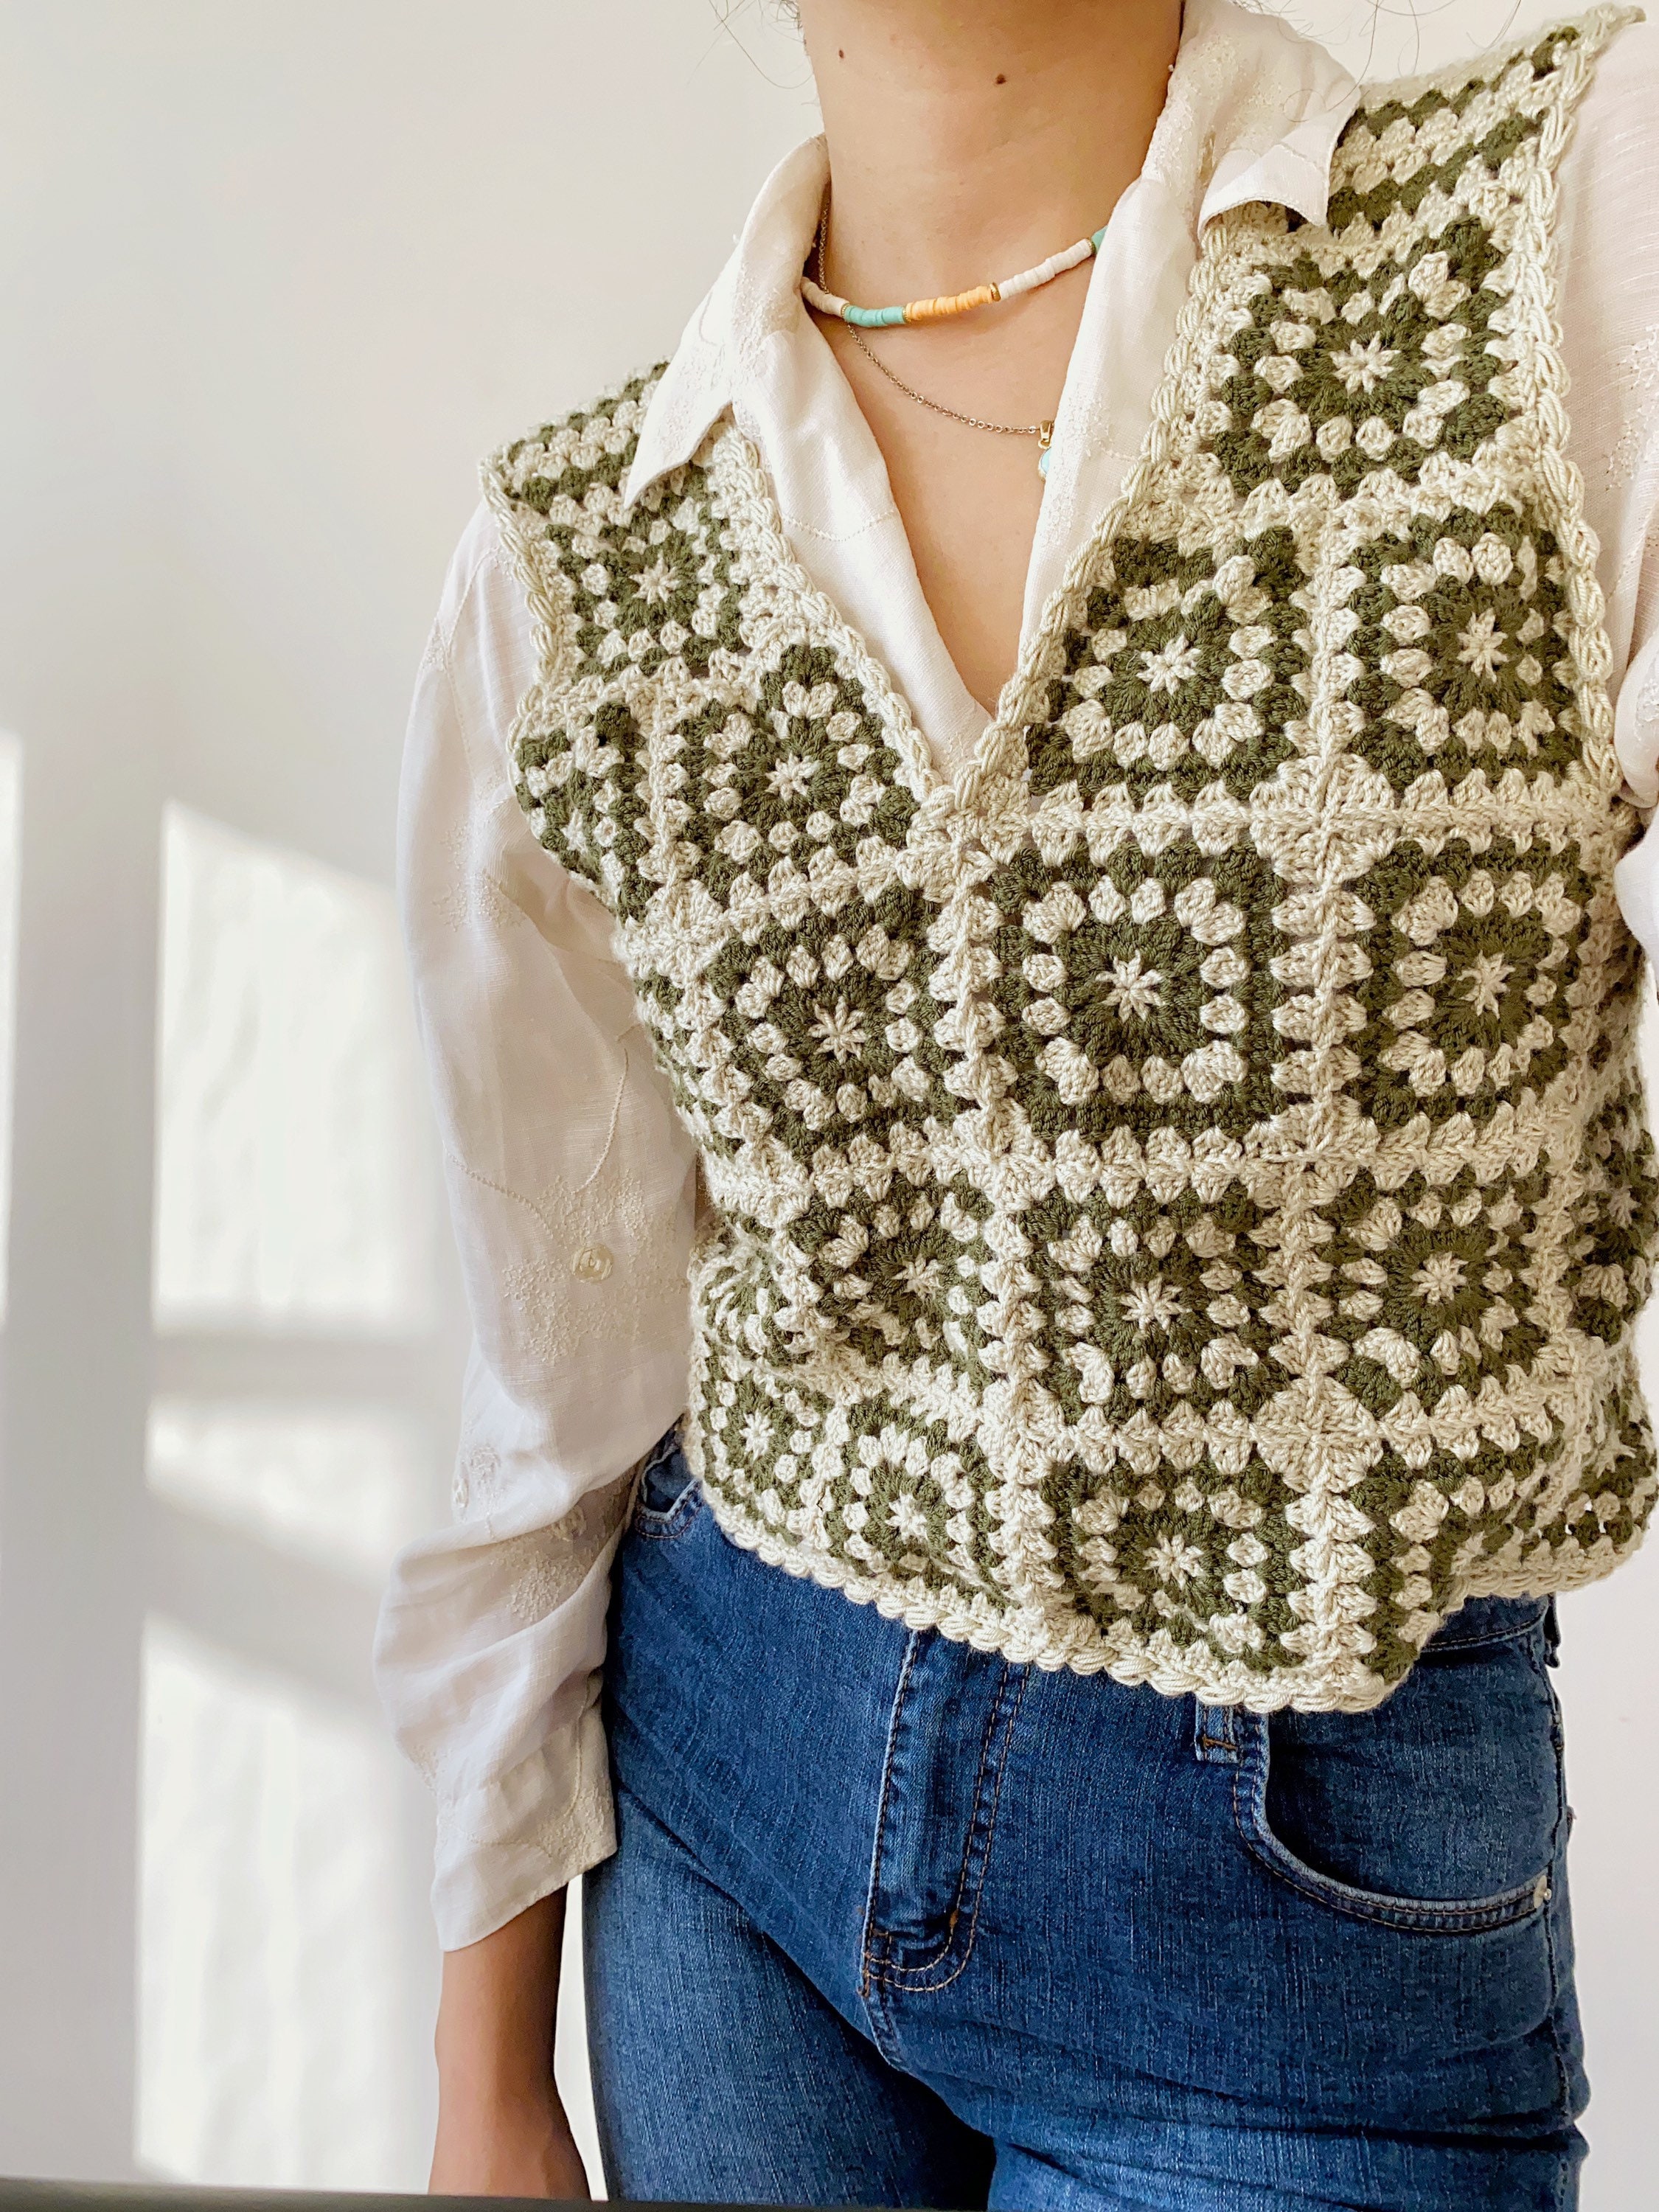 Handknitted Crochet Vest With Retro Granny Square,handmade Women Tank Top, crochet Sleeveless Top,unisex Crochet Summer Fall Outfit -  Canada